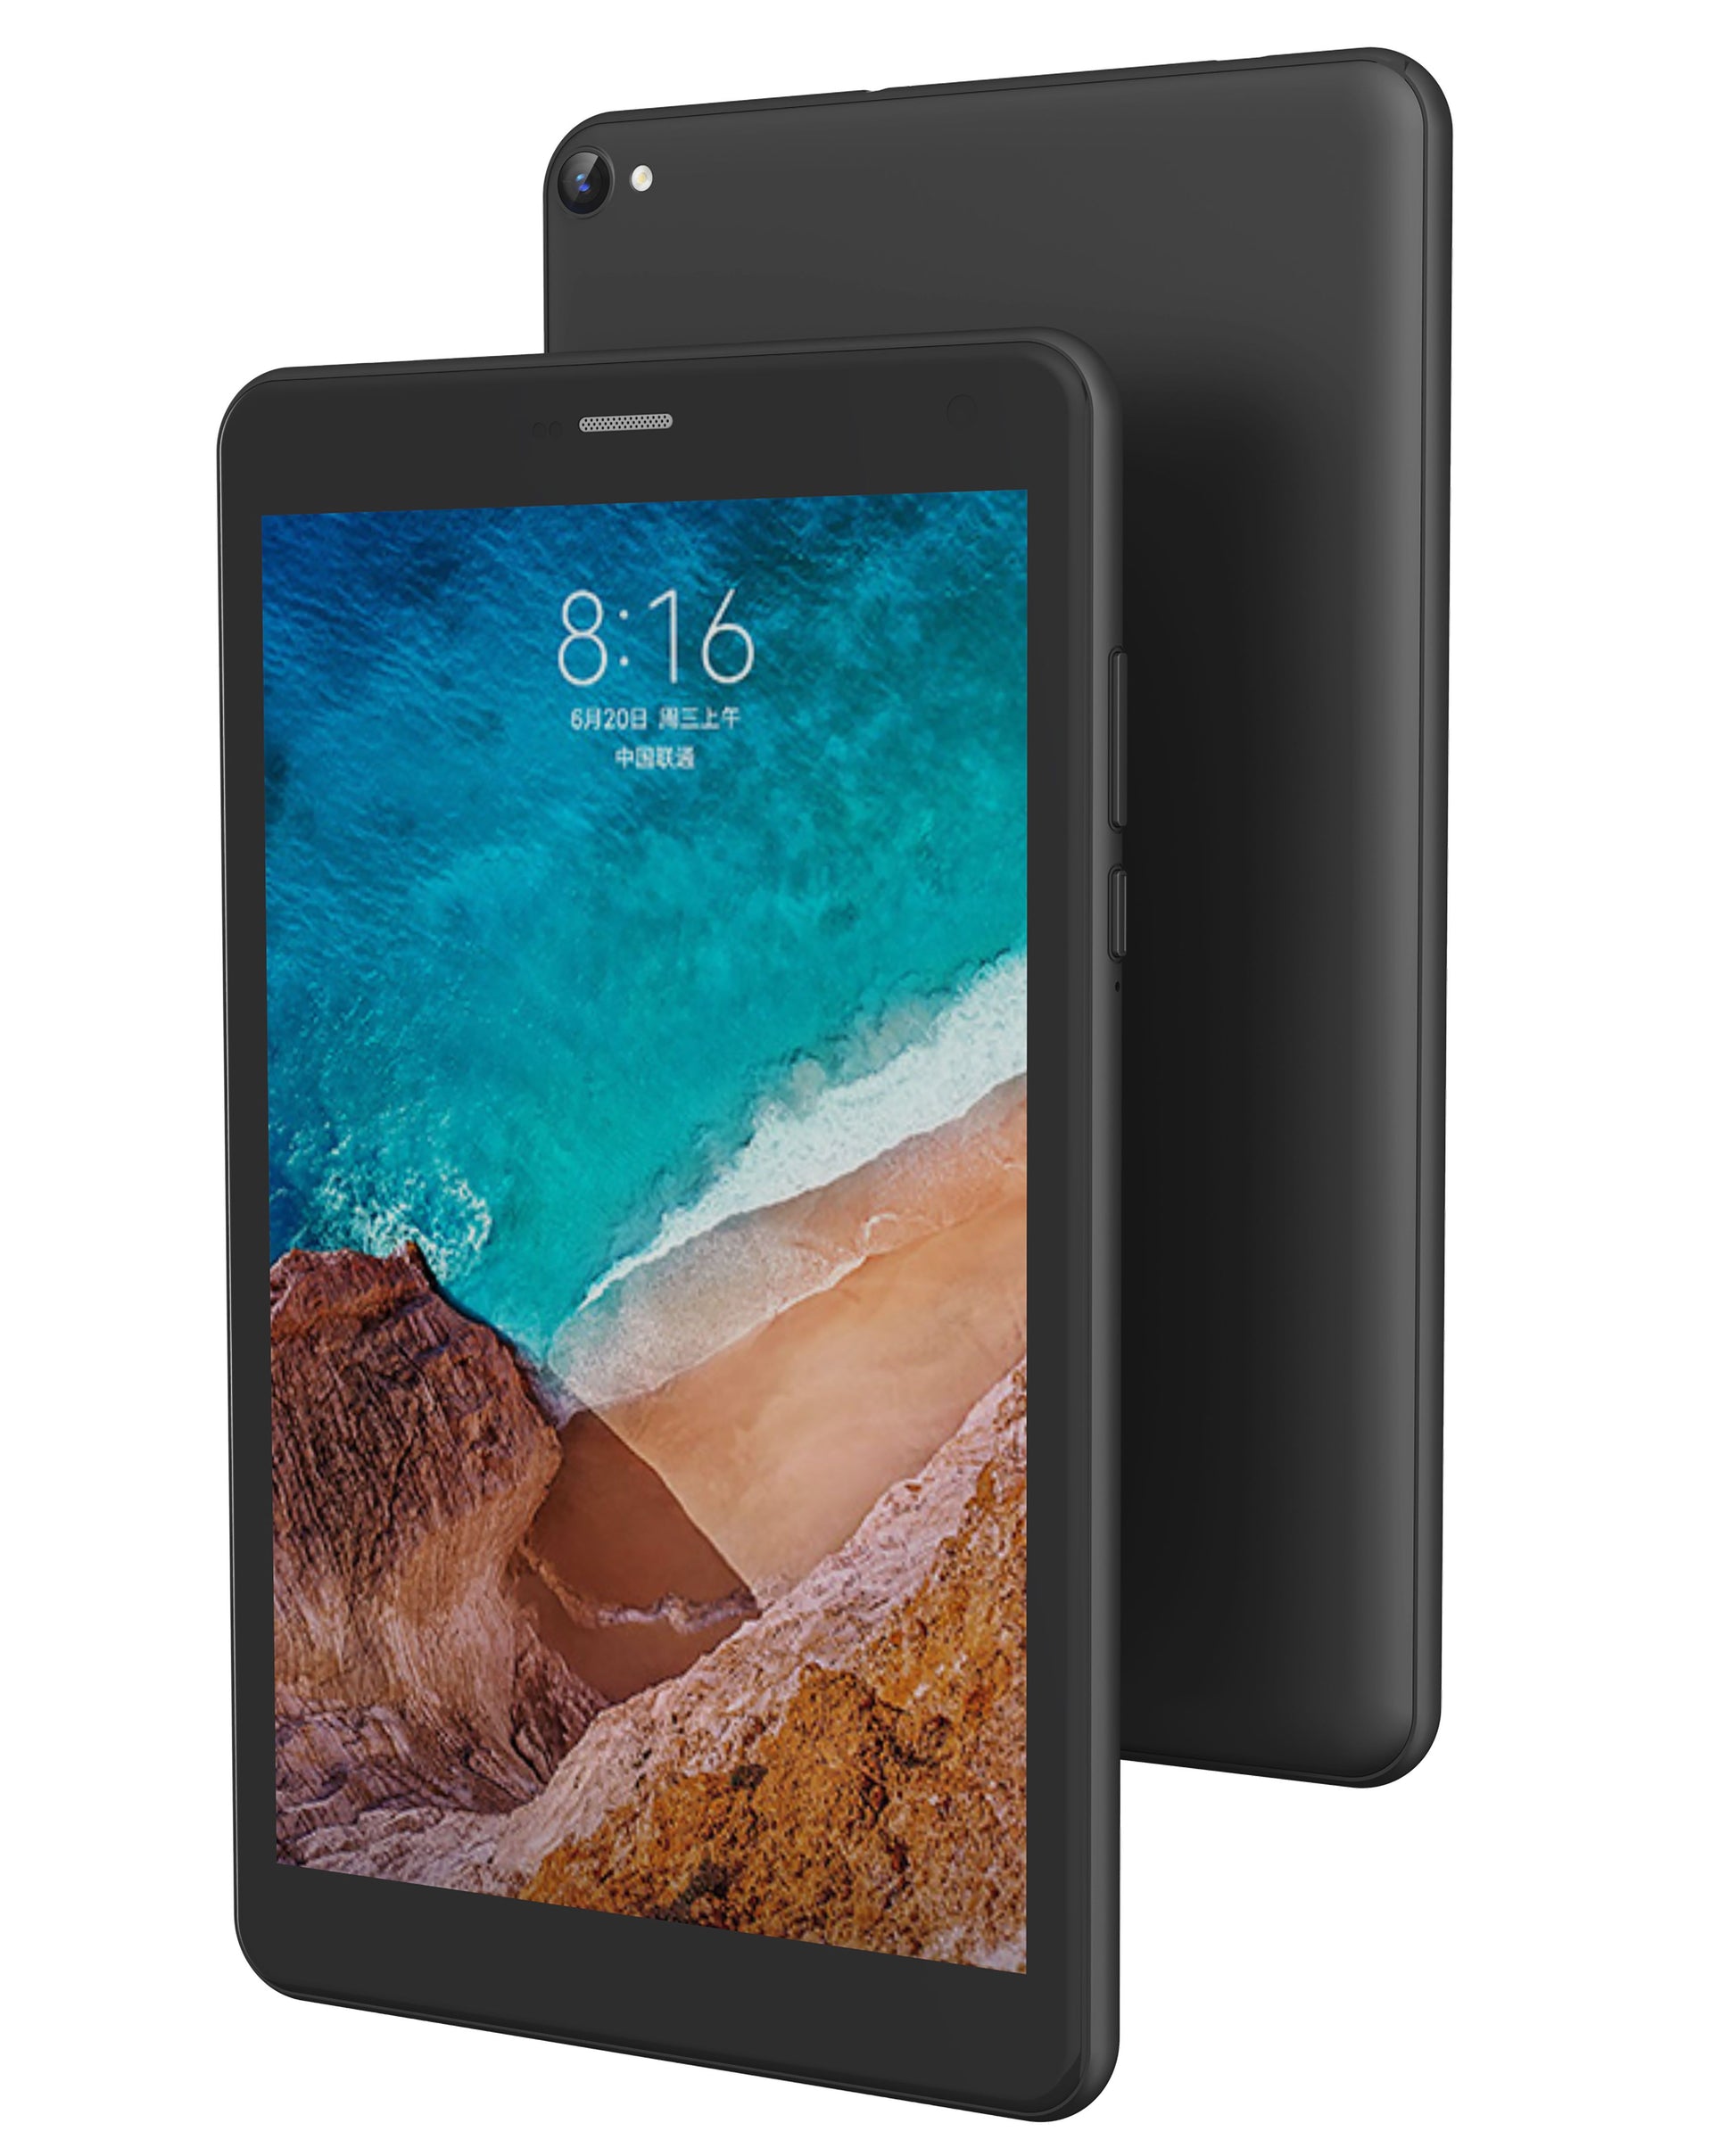 Tablet L8 Android Tablet Tablet 8 pulgadas Android Tablet, Bluetooth, Tablet  PC, Negro